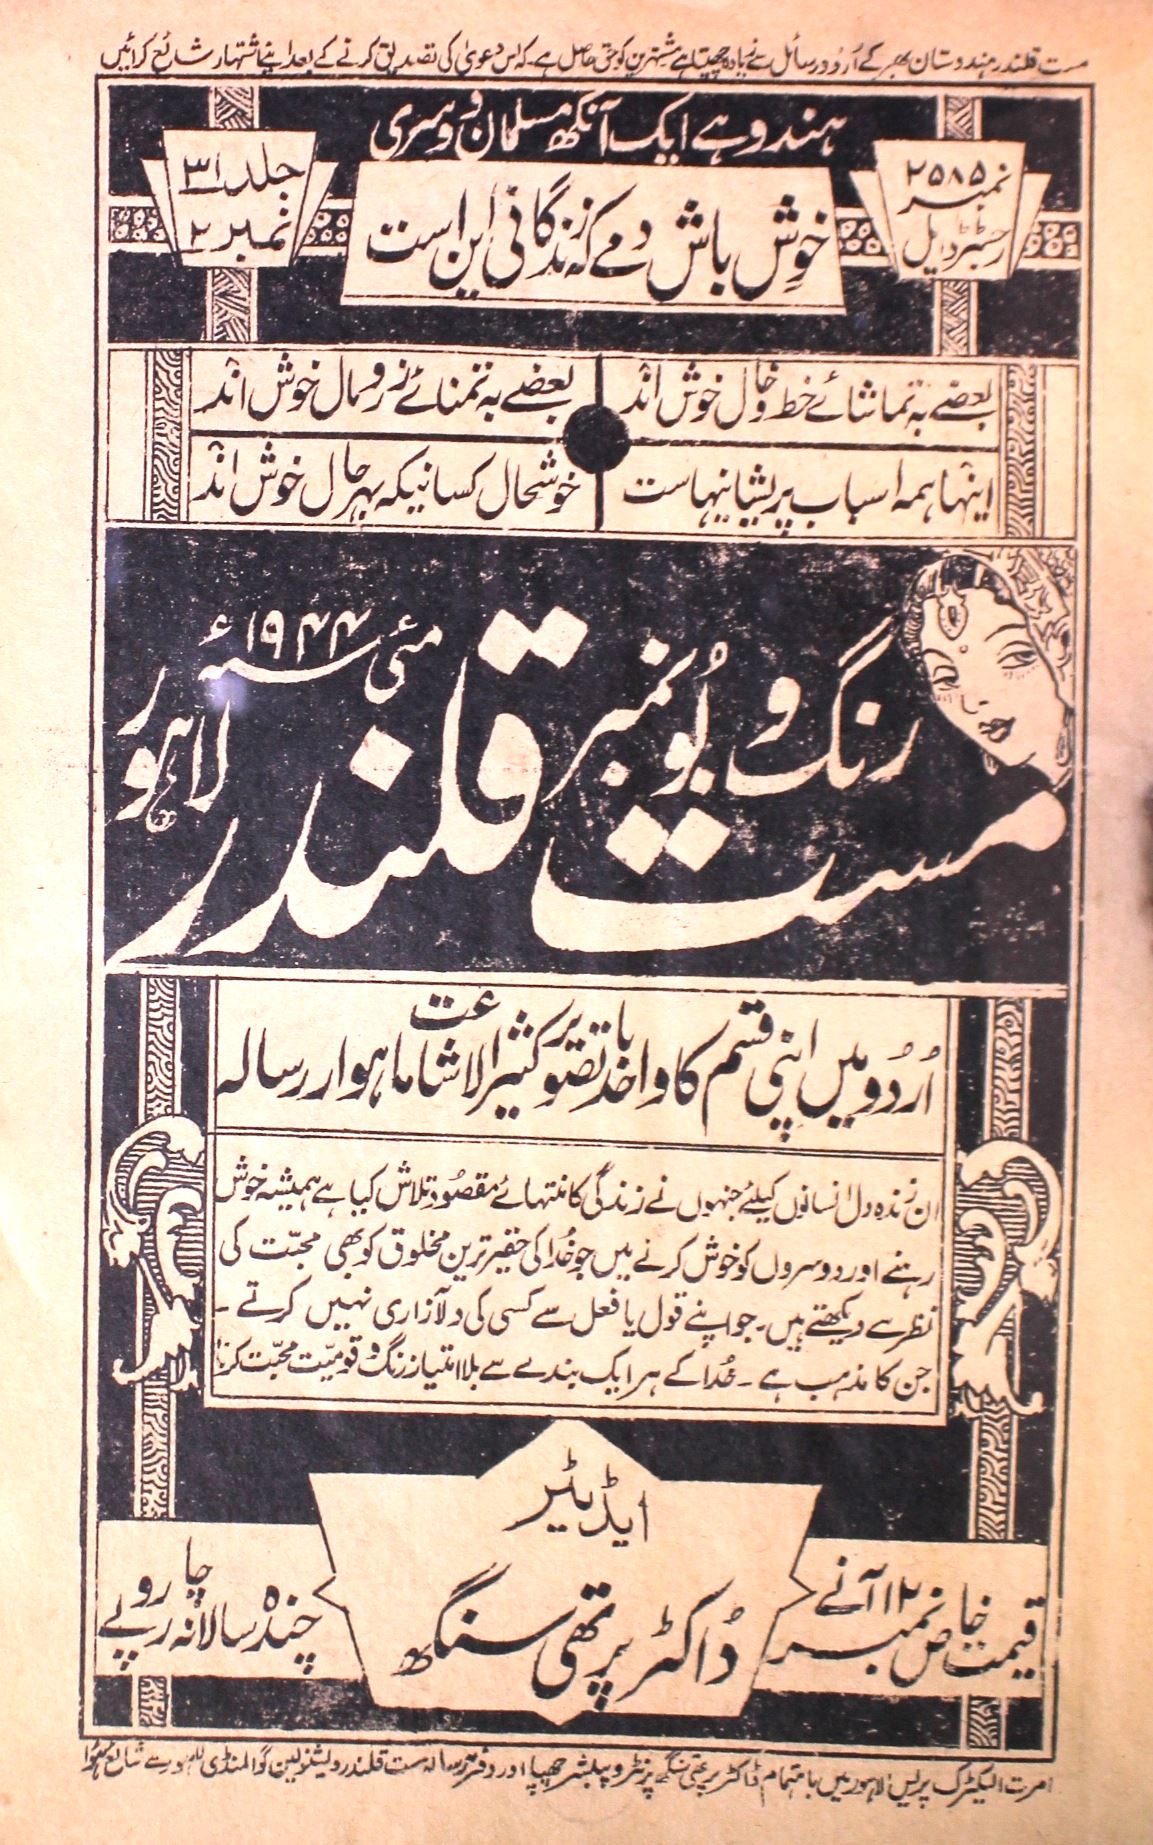 Mast Qalandar Jild 31 No 2 May 1944-SVK-Shumara Number-002